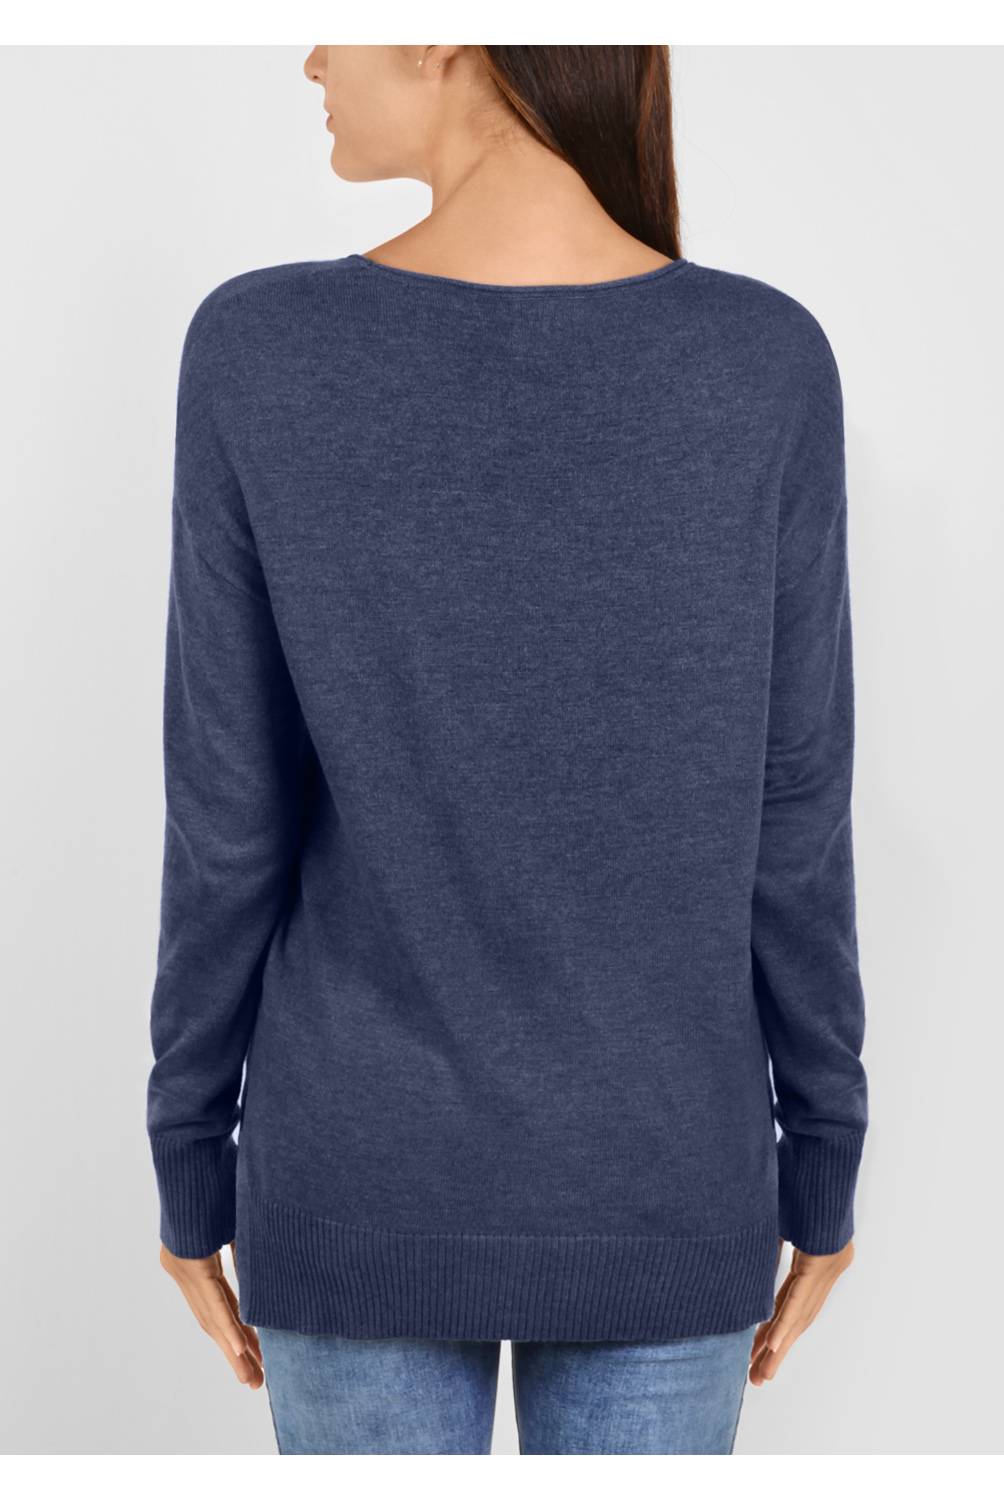 UNIVERSITY CLUB - Sweater Basic New